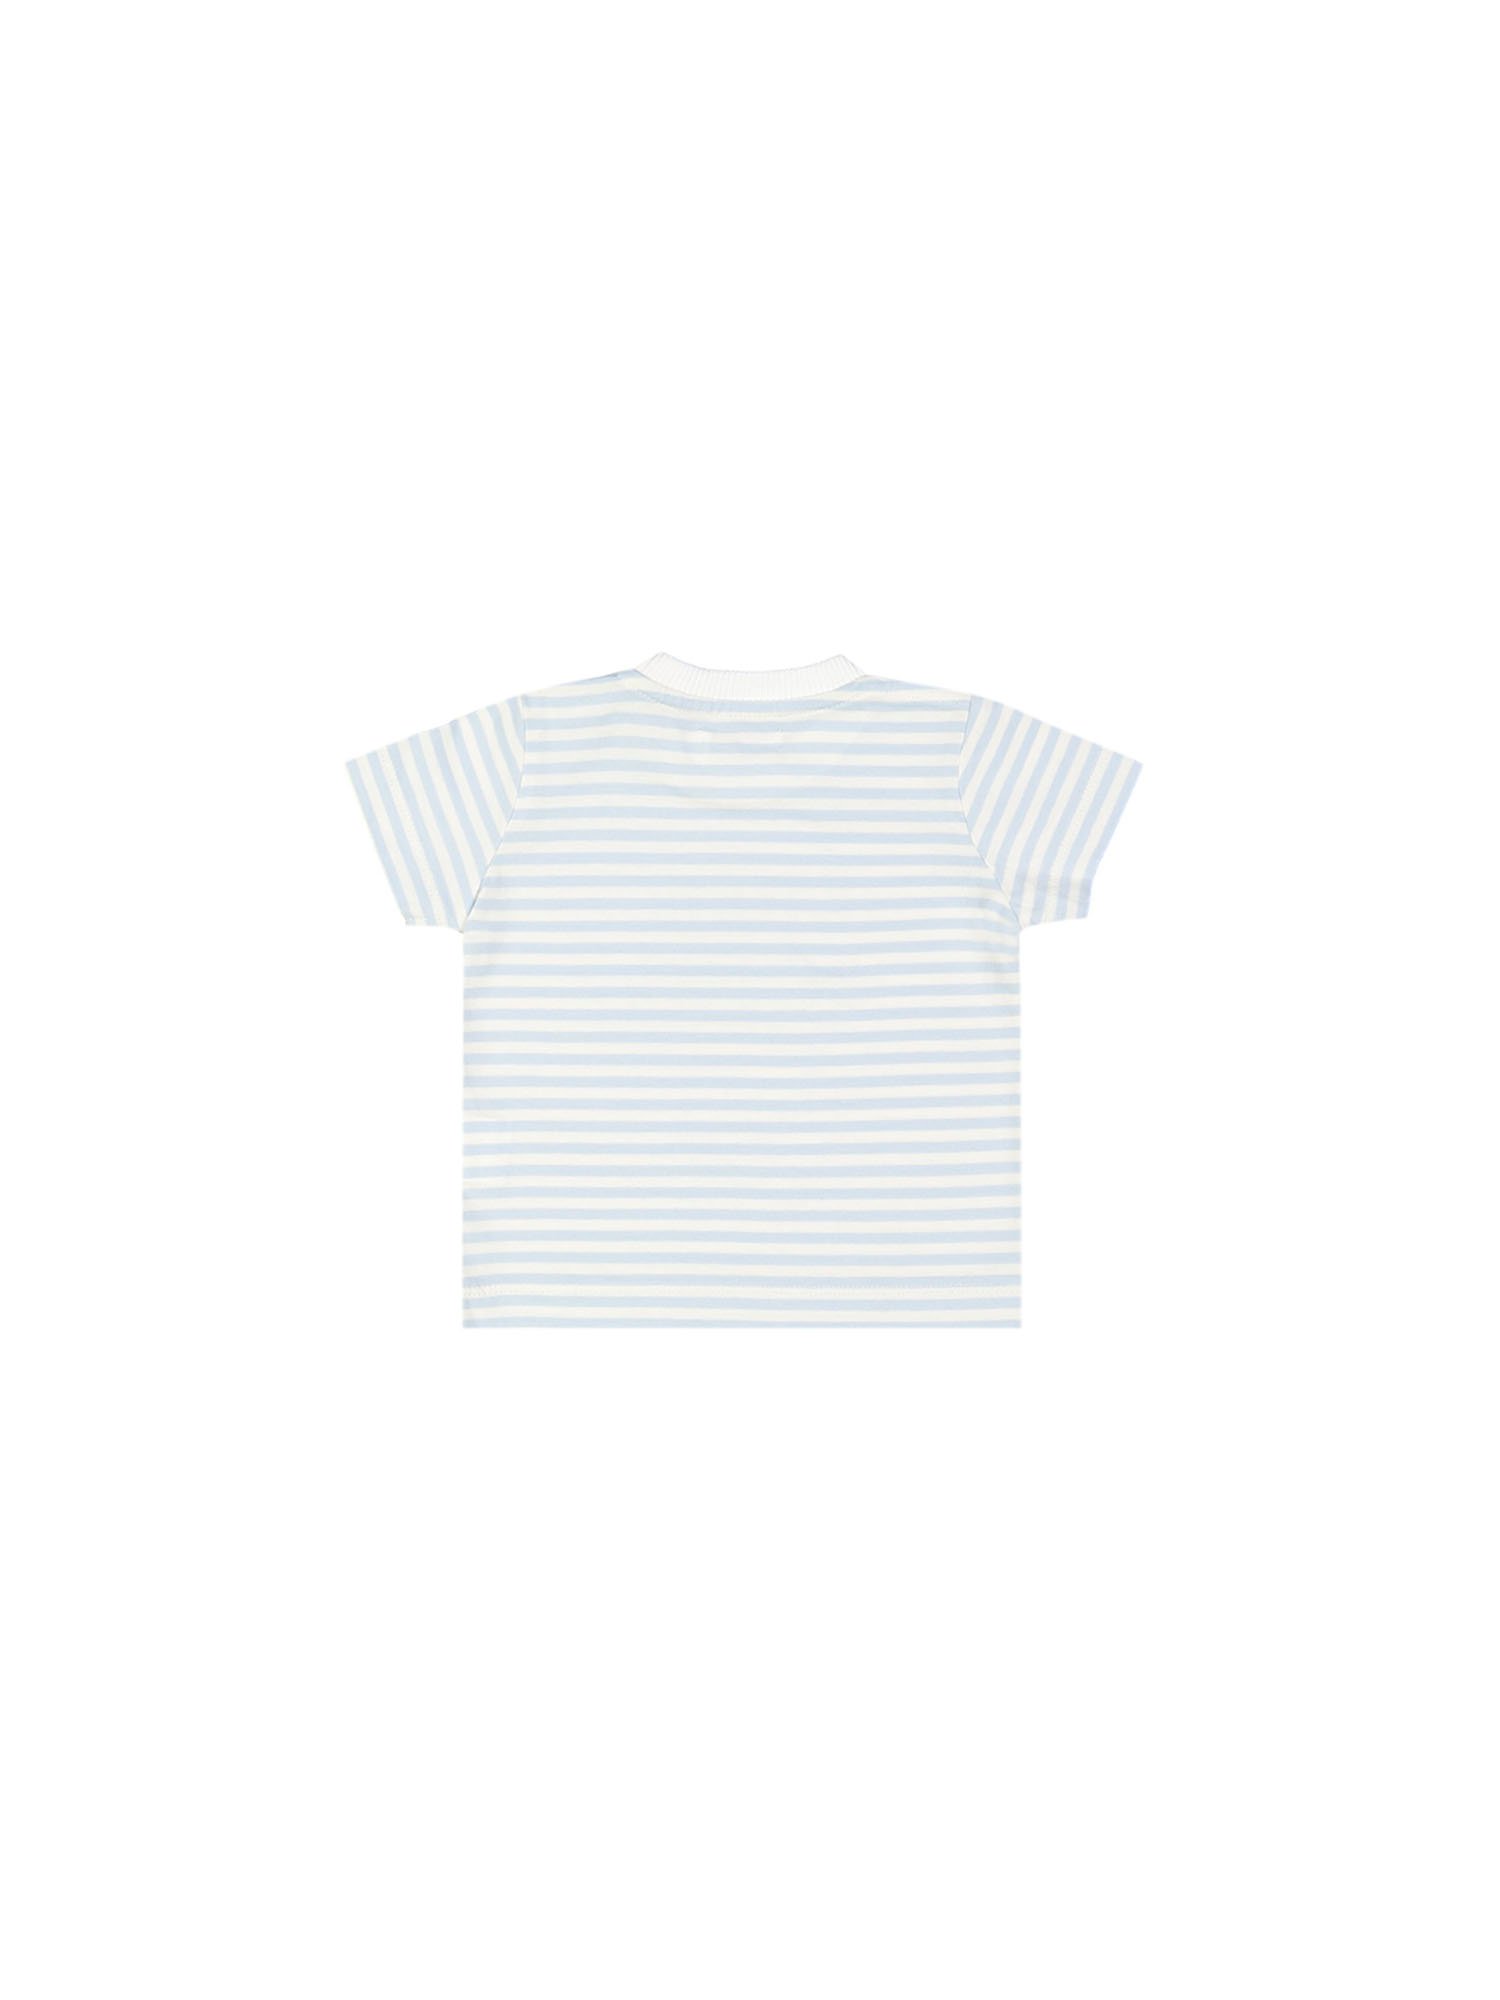 t-shirt mini rayé étoile de mer bleu clair